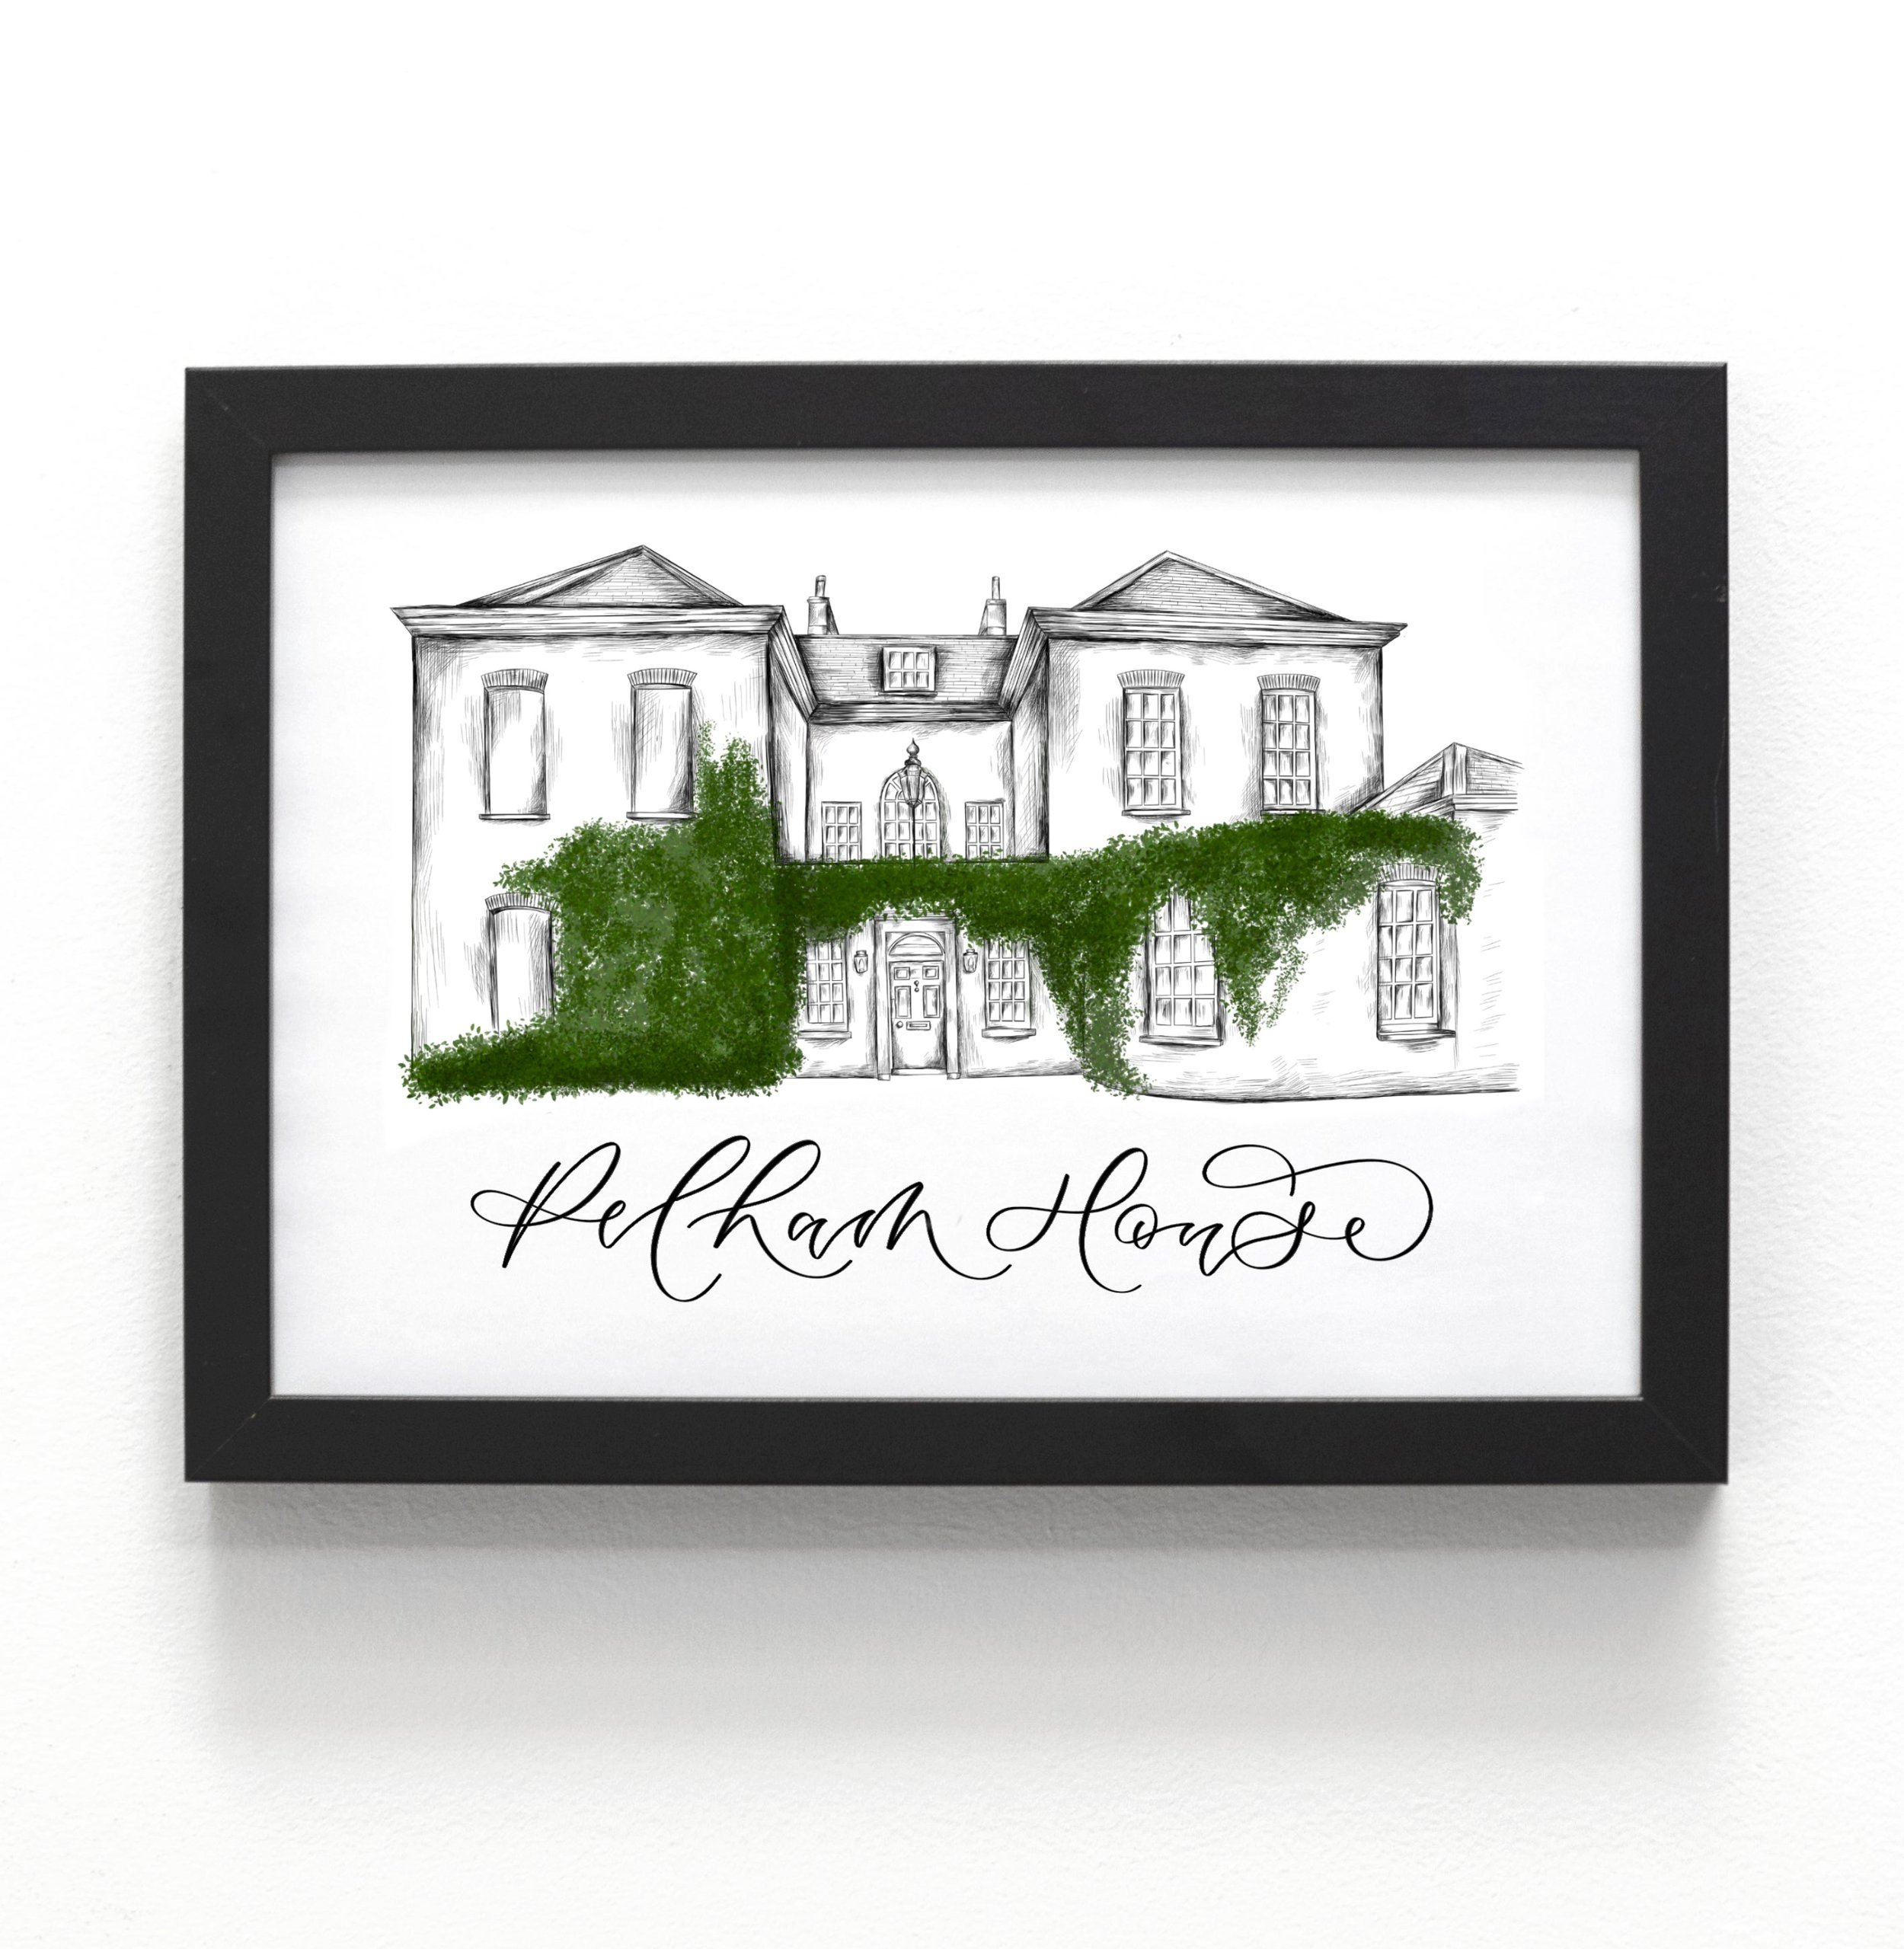 Pelham house drawing - venue illustration of Pelham House by The Amyverse - Pelham house wedding stationery.jpg